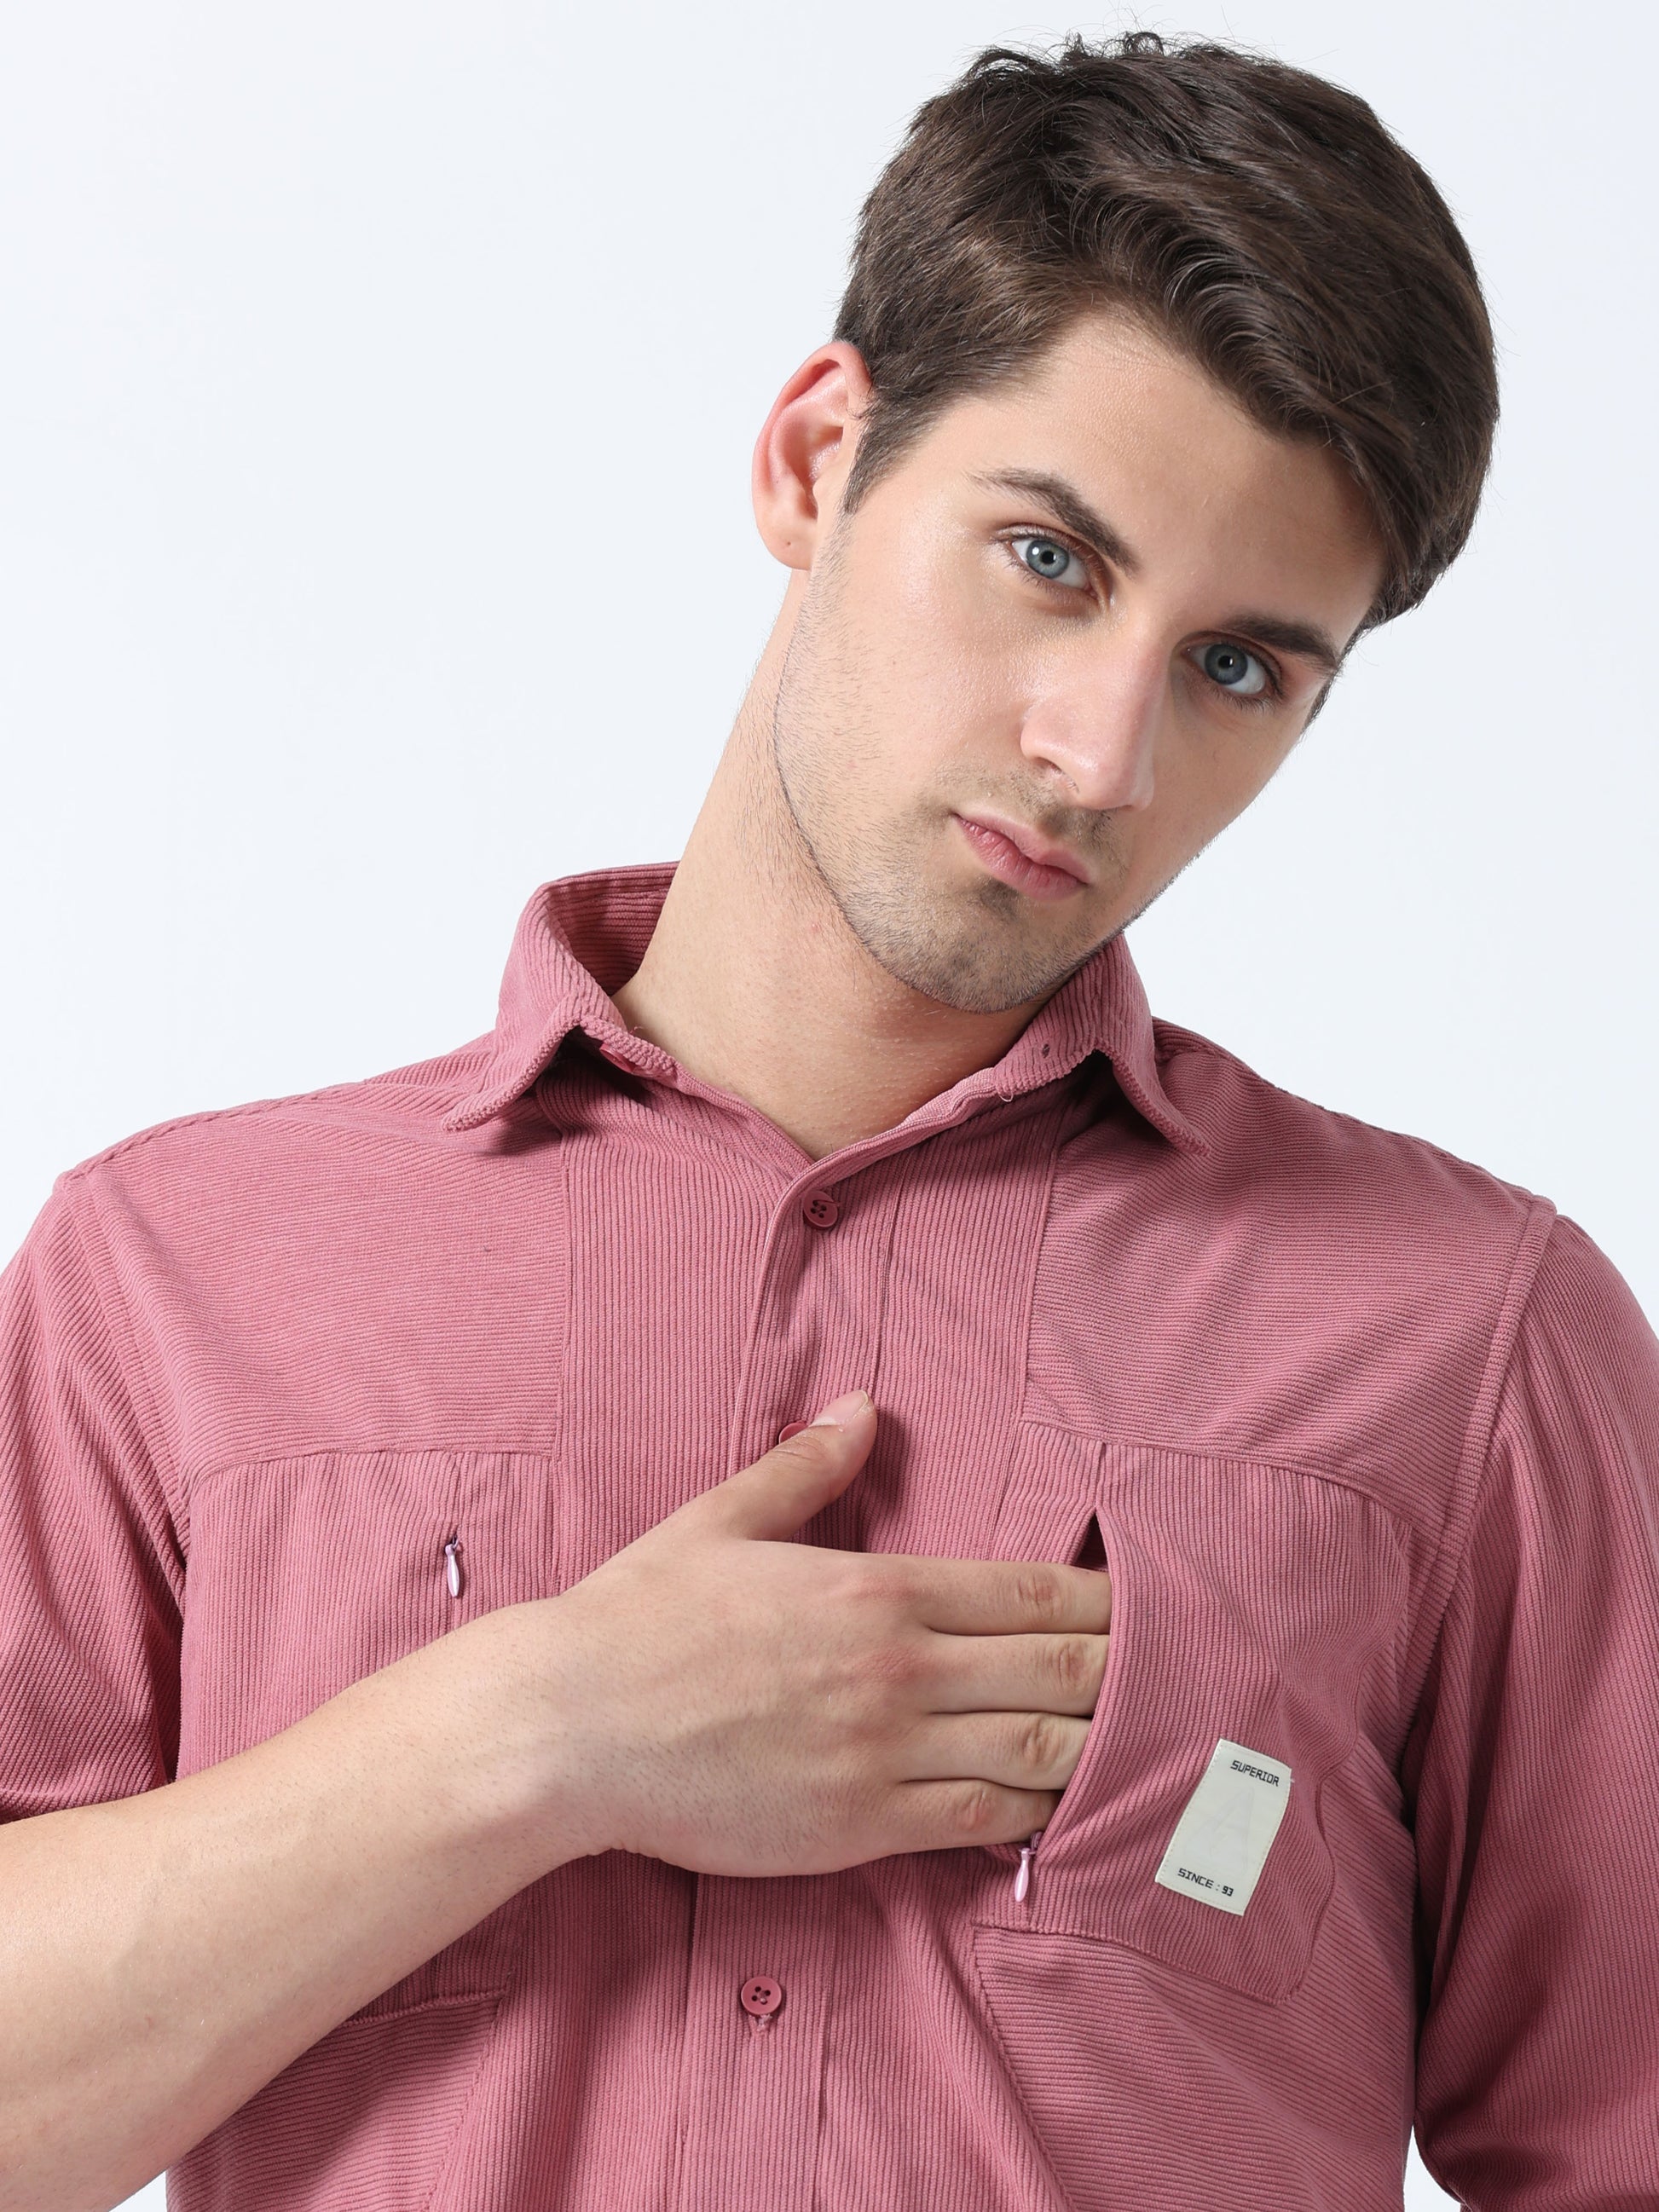 Pink Fashionable Double Pocket Men's Corduroy Plain Shirt